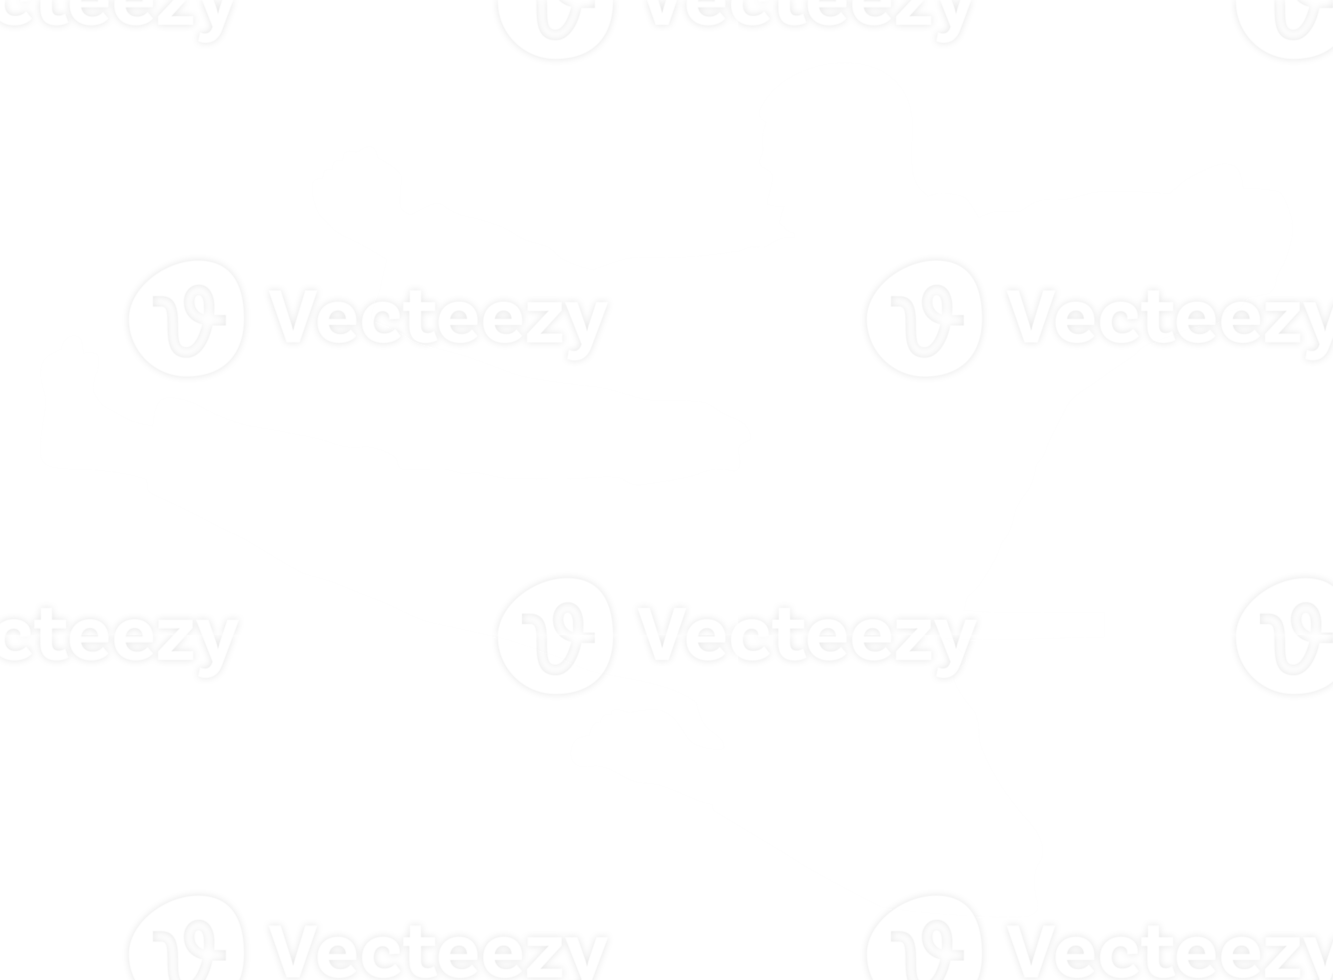 silhueta do marcial artista chute, taekwondo, karatê, pencak silat, kungfu, para logotipo ou gráfico Projeto elemento. formato png